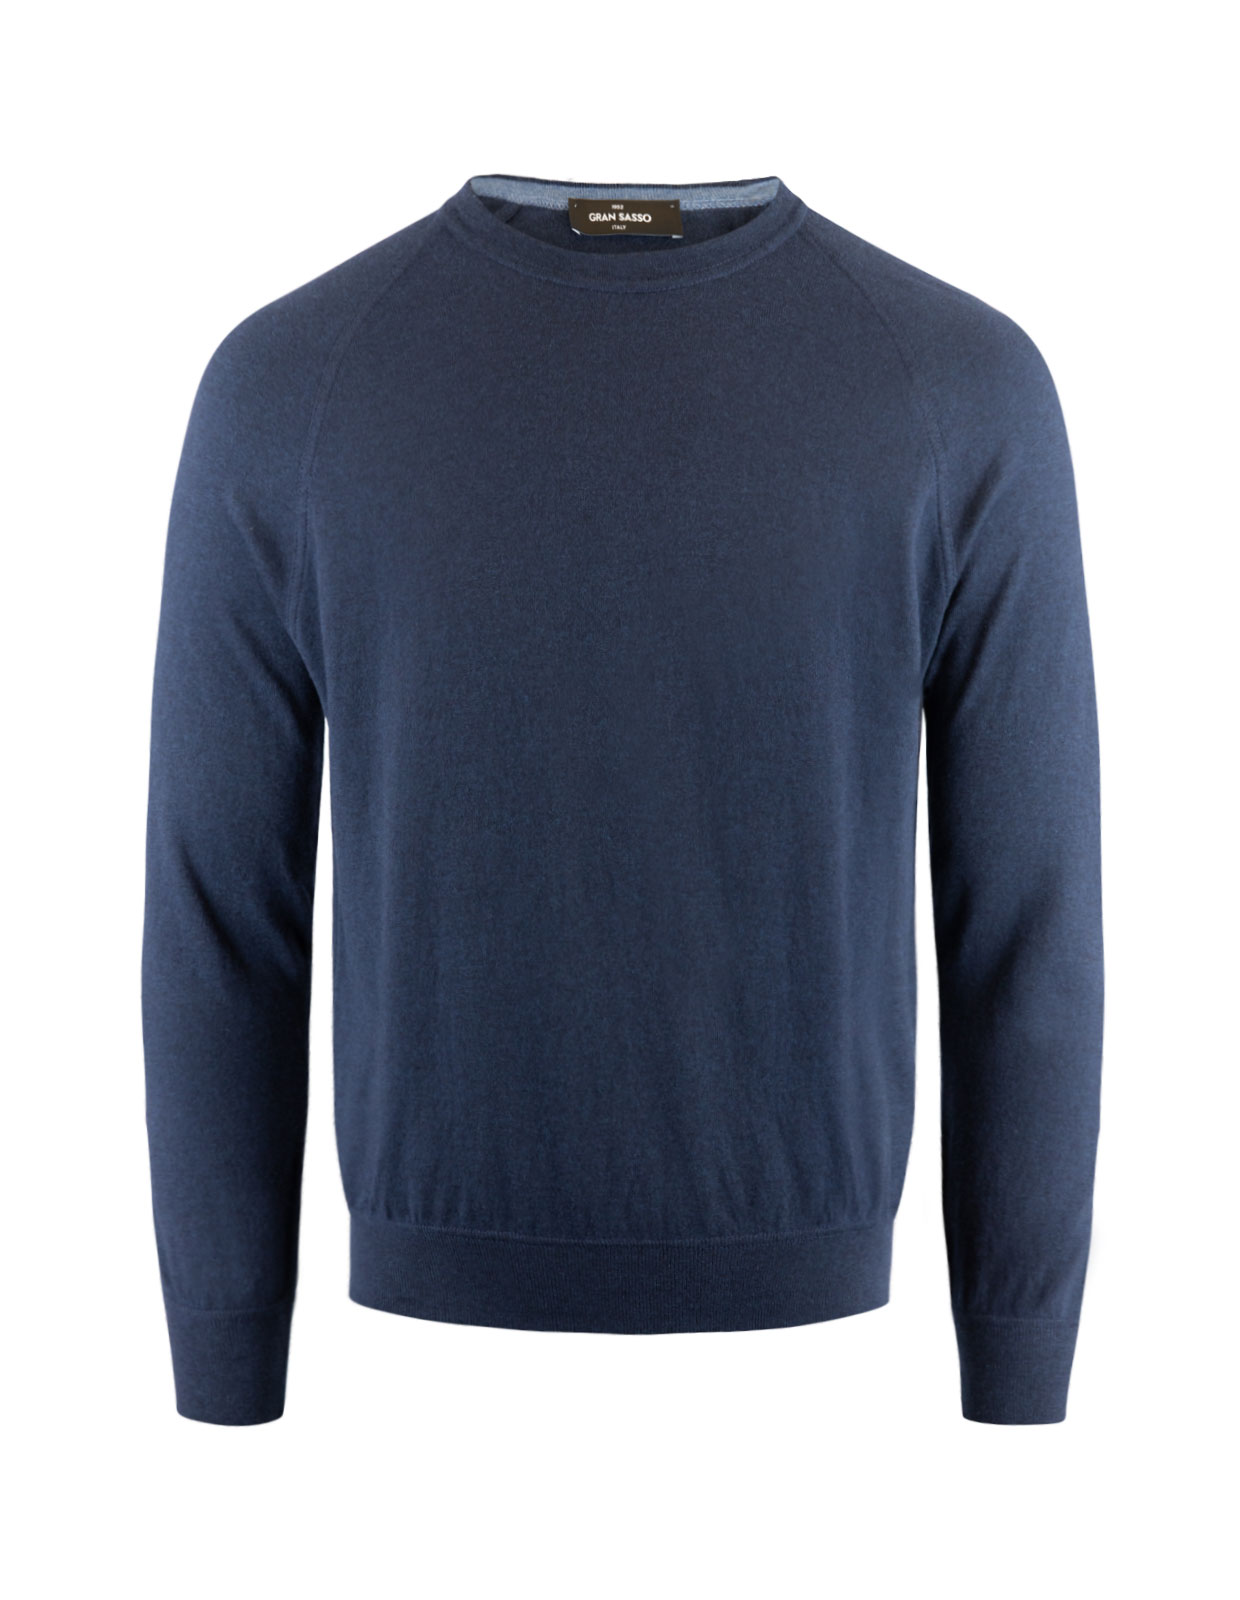 College Sweater Cotton Cashmere Navy